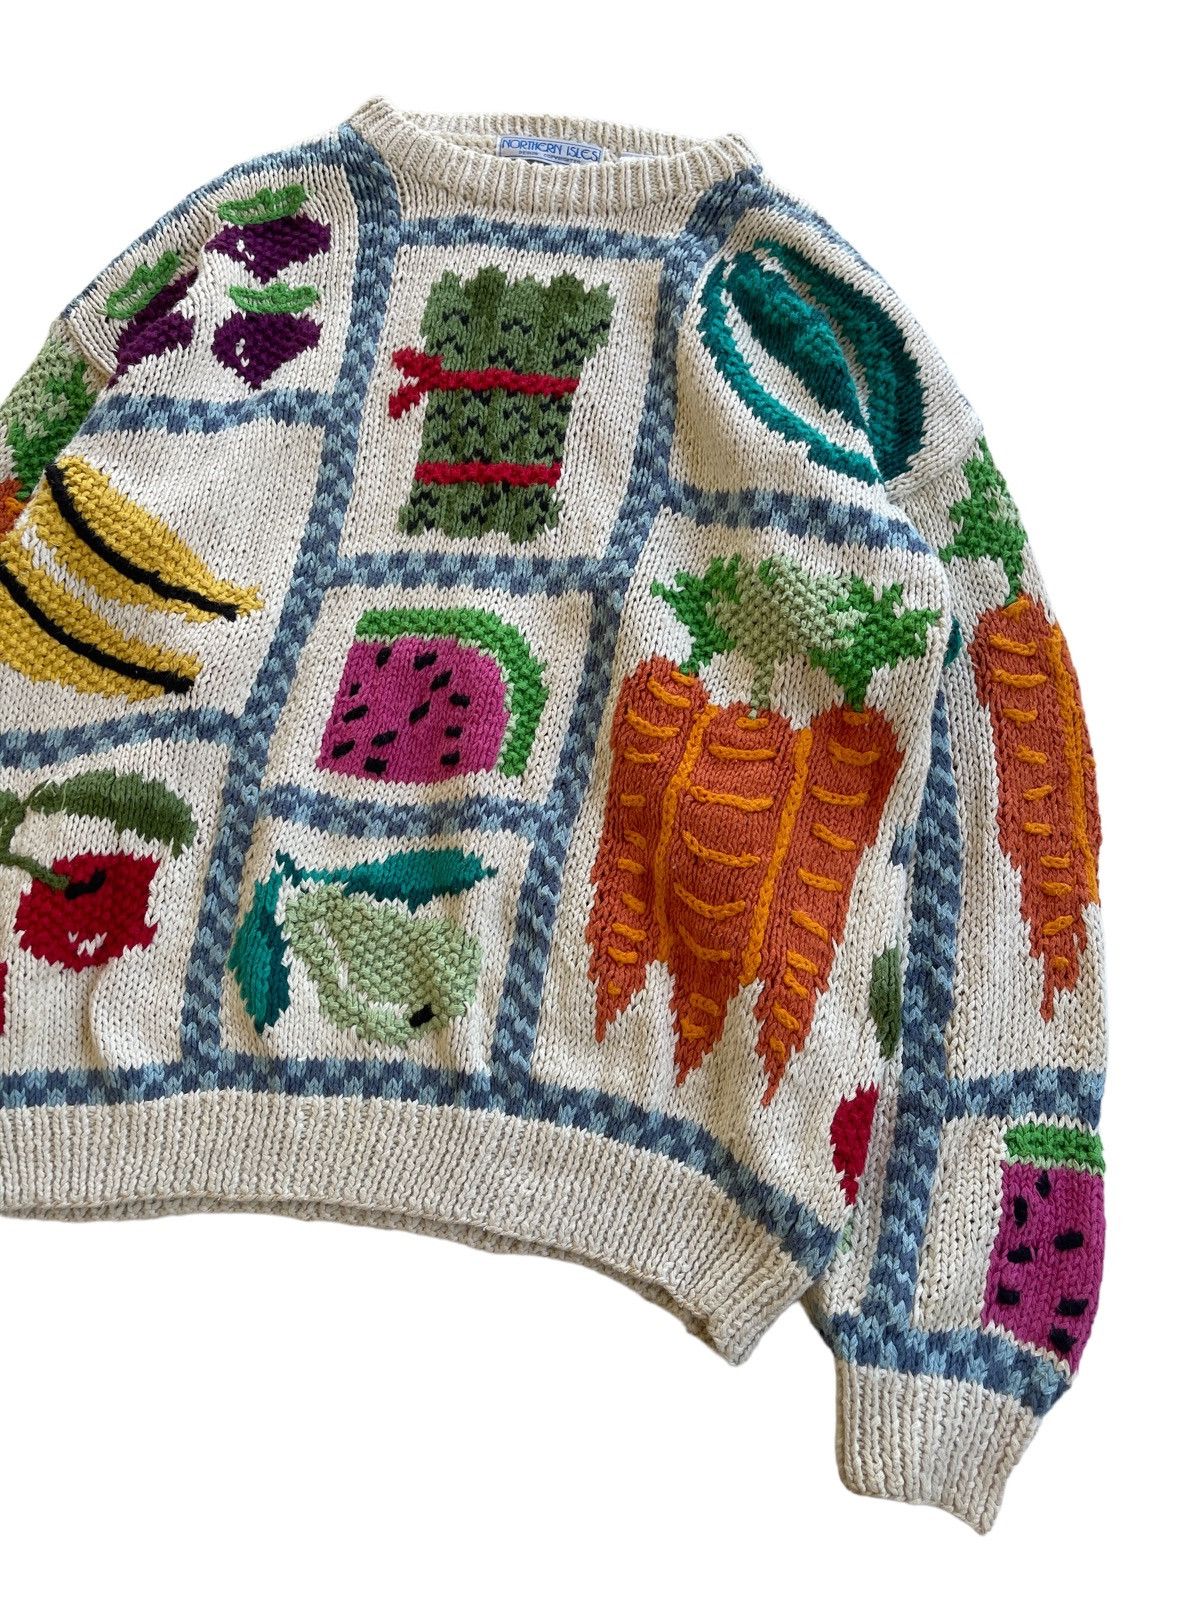 Vintage Vintage Northern Isles Fullprint Handknit Sweater Size M / US 6-8 / IT 42-44 - 5 Thumbnail